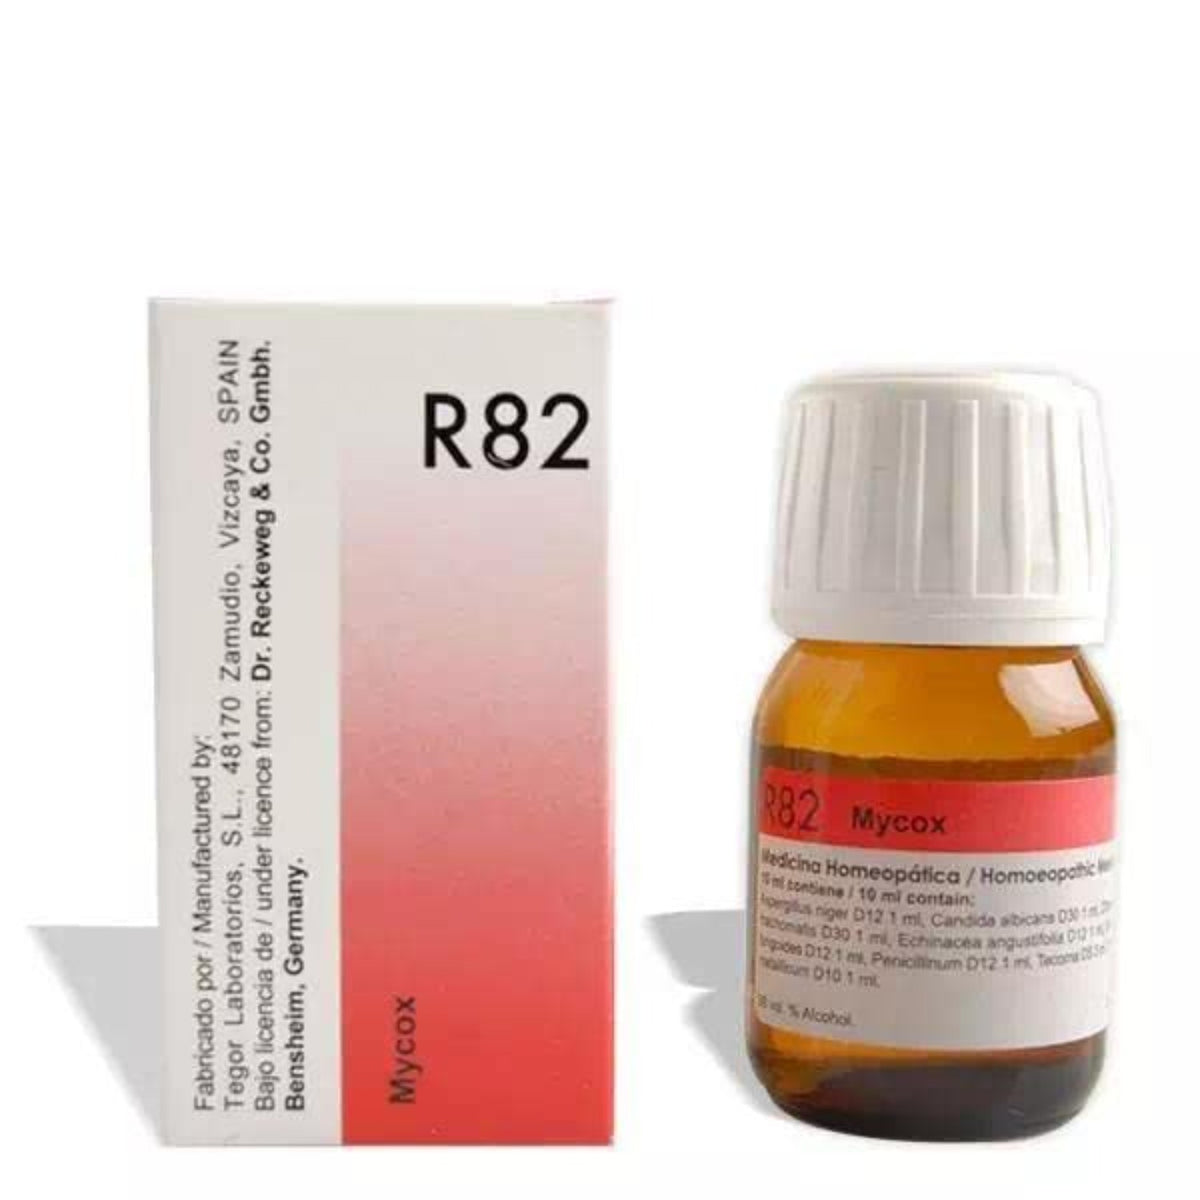 Dr Reckeweg Homoeopathy R82 Anti Fungal Drops 22 ml